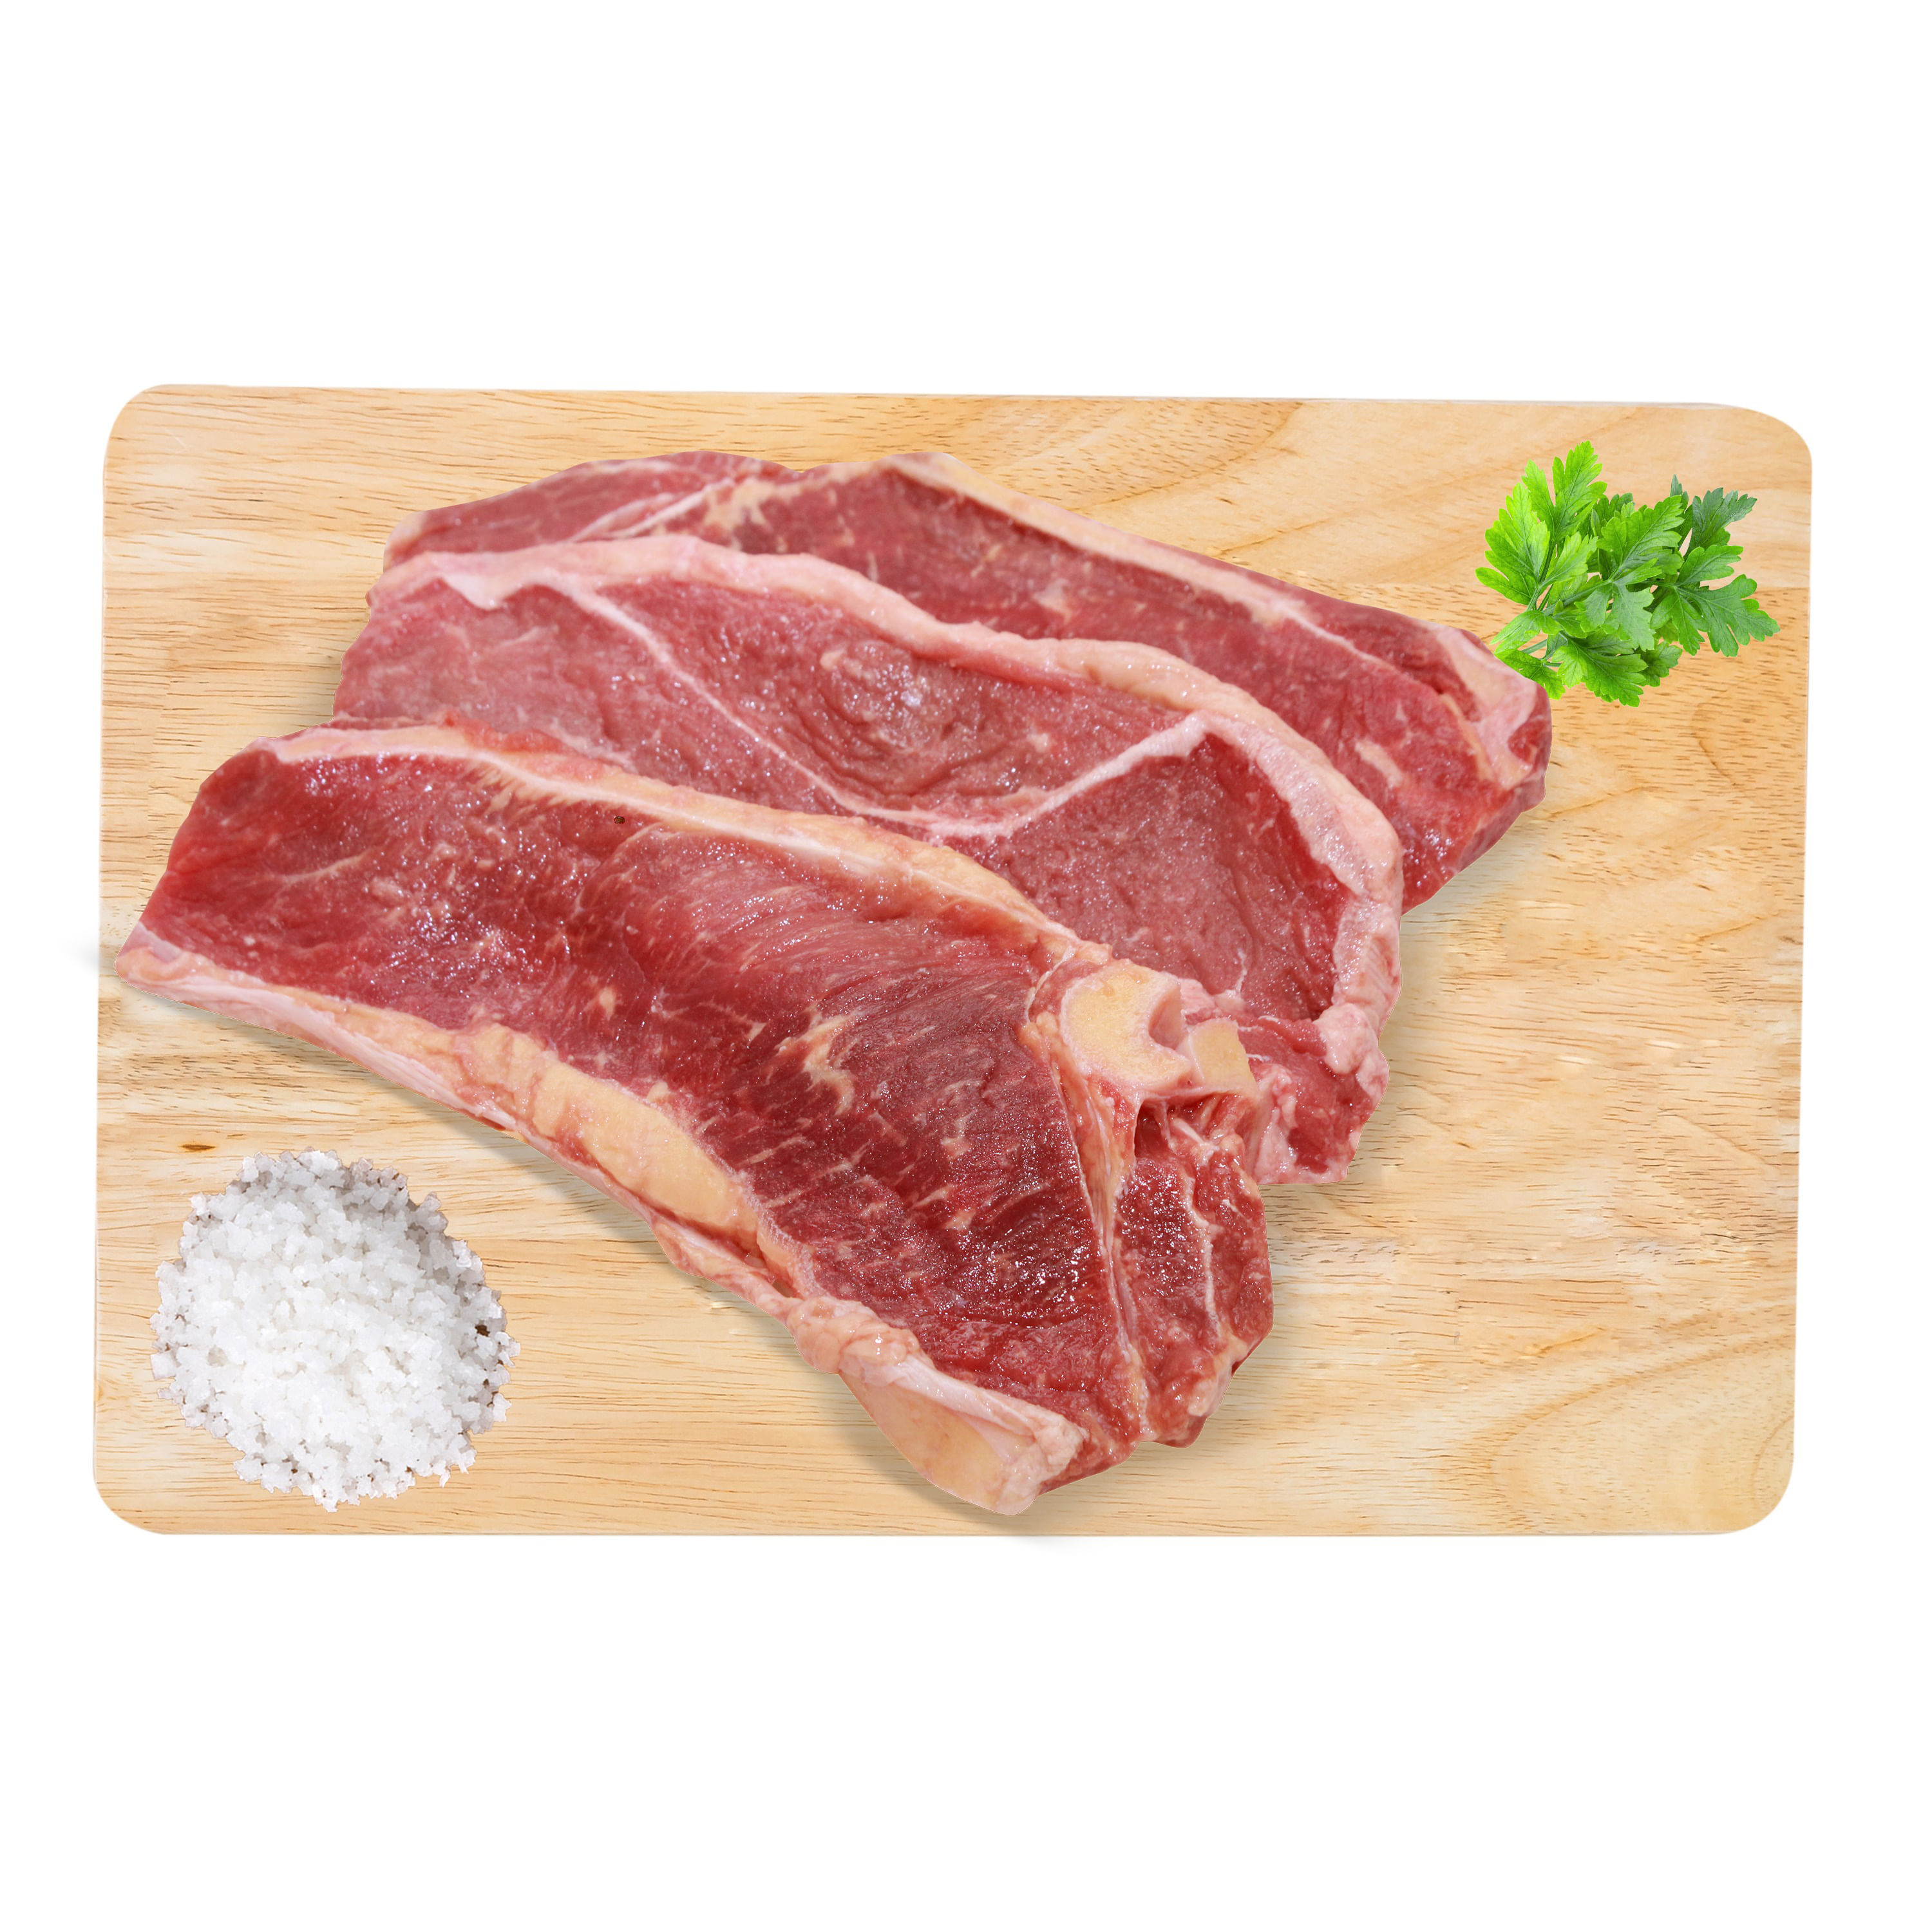 Carne-Viuda-Con-Hueso-Porcionado-1Lb-1-44105